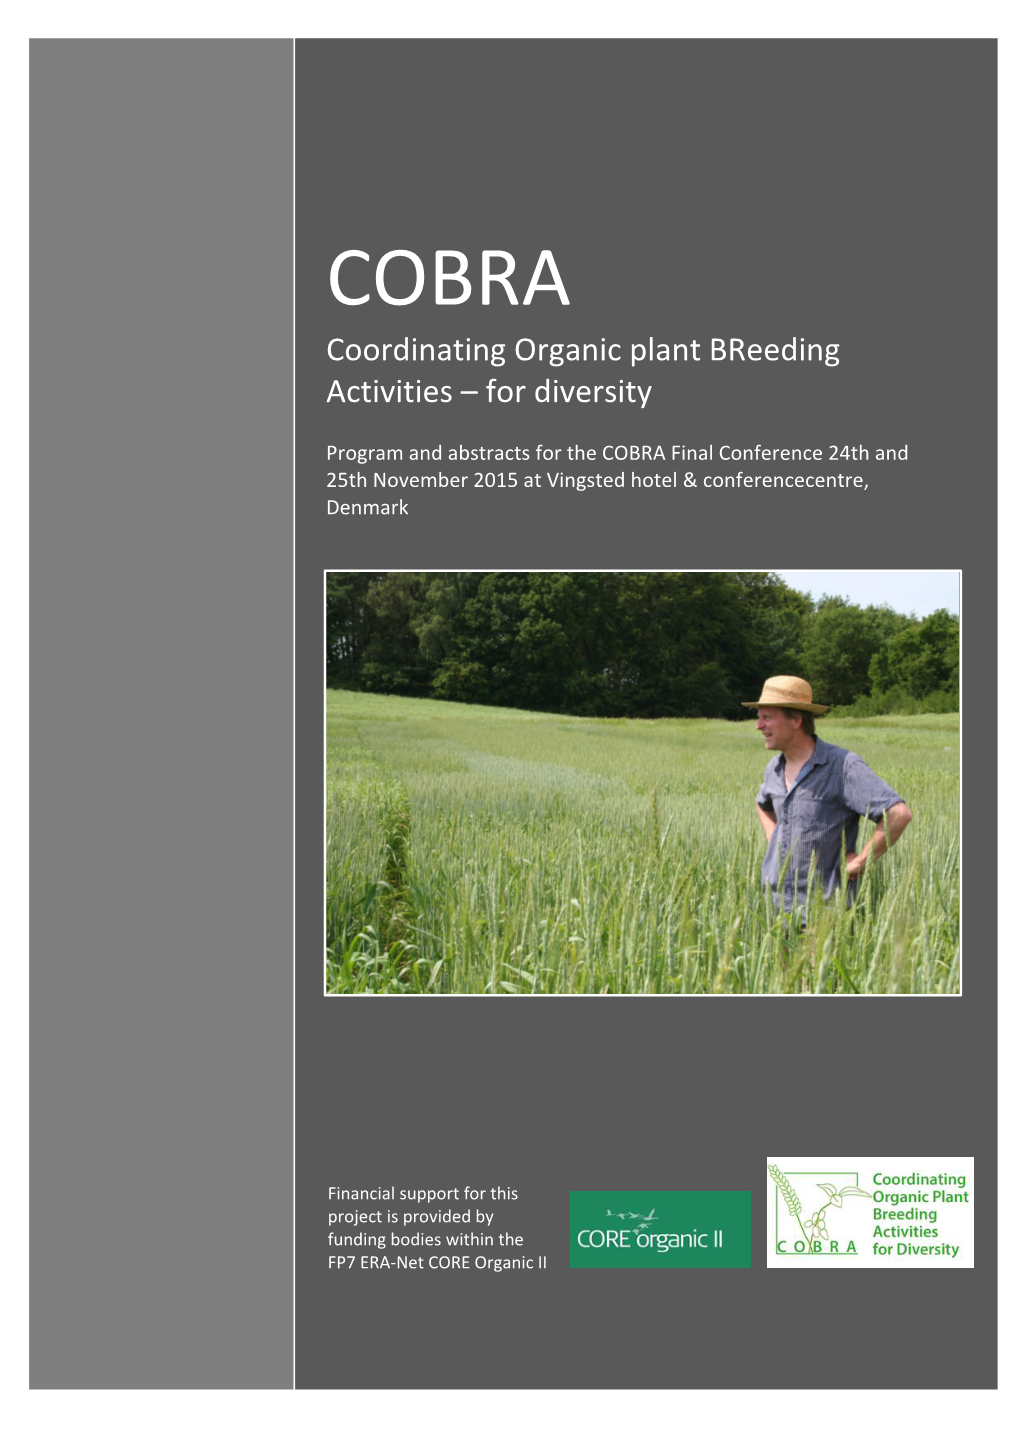 Coordinating Organic Plant Breeding Activities – for Diversity